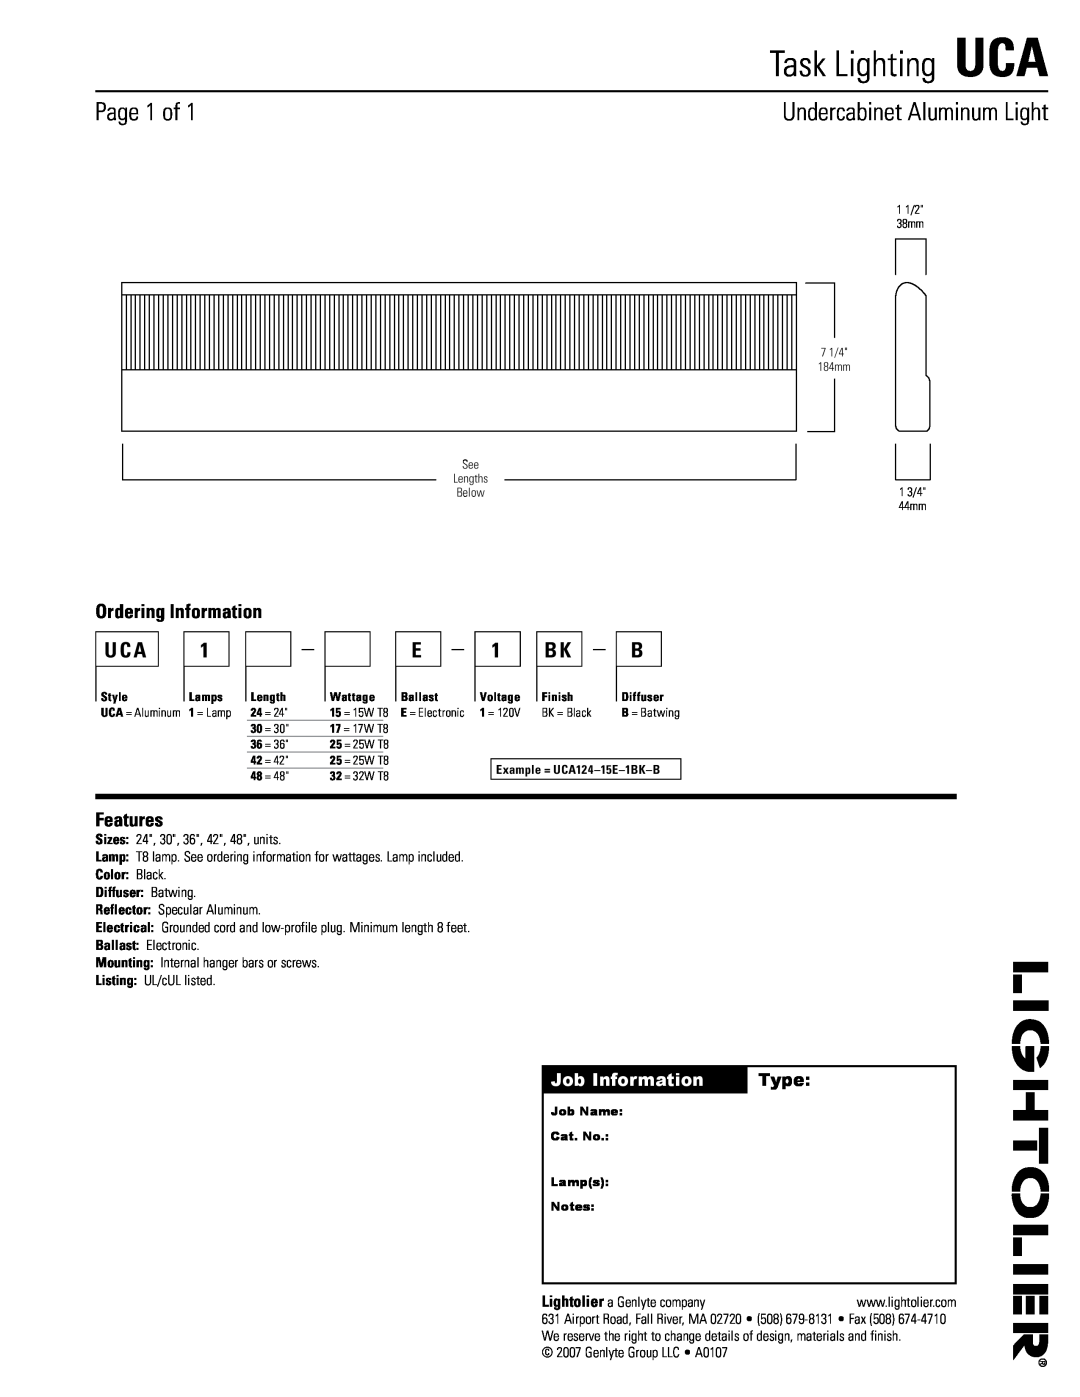 Lightolier manual Task Lighting UCA, Page of, Undercabinet Aluminum Light, U C A, Ordering Information, Features, Type 